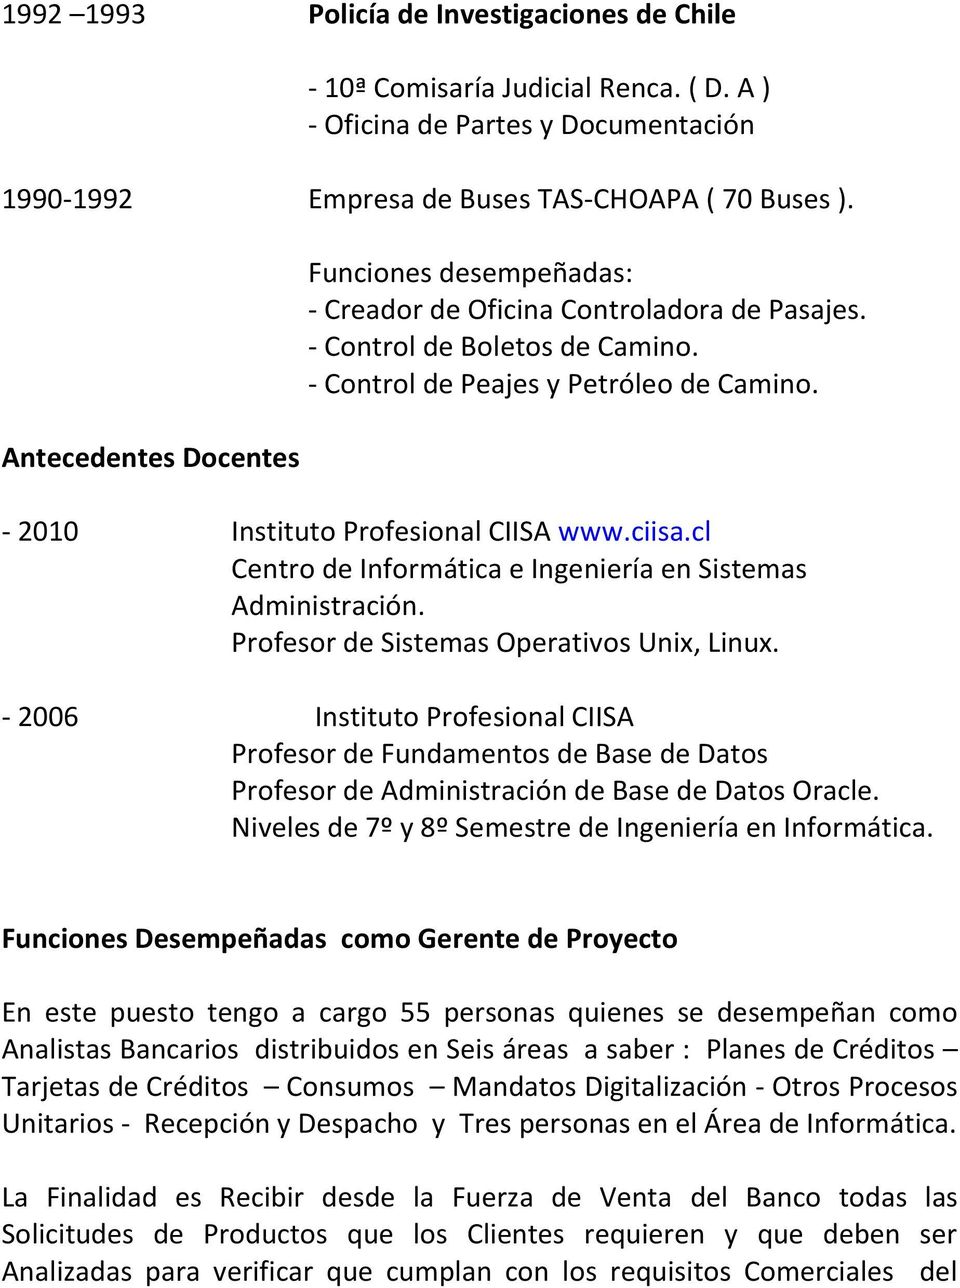 - 2010 Instituto Profesional CIISA www.ciisa.cl Centro de Informática e Ingeniería en Sistemas Administración. Profesor de Sistemas Operativos Unix, Linux.